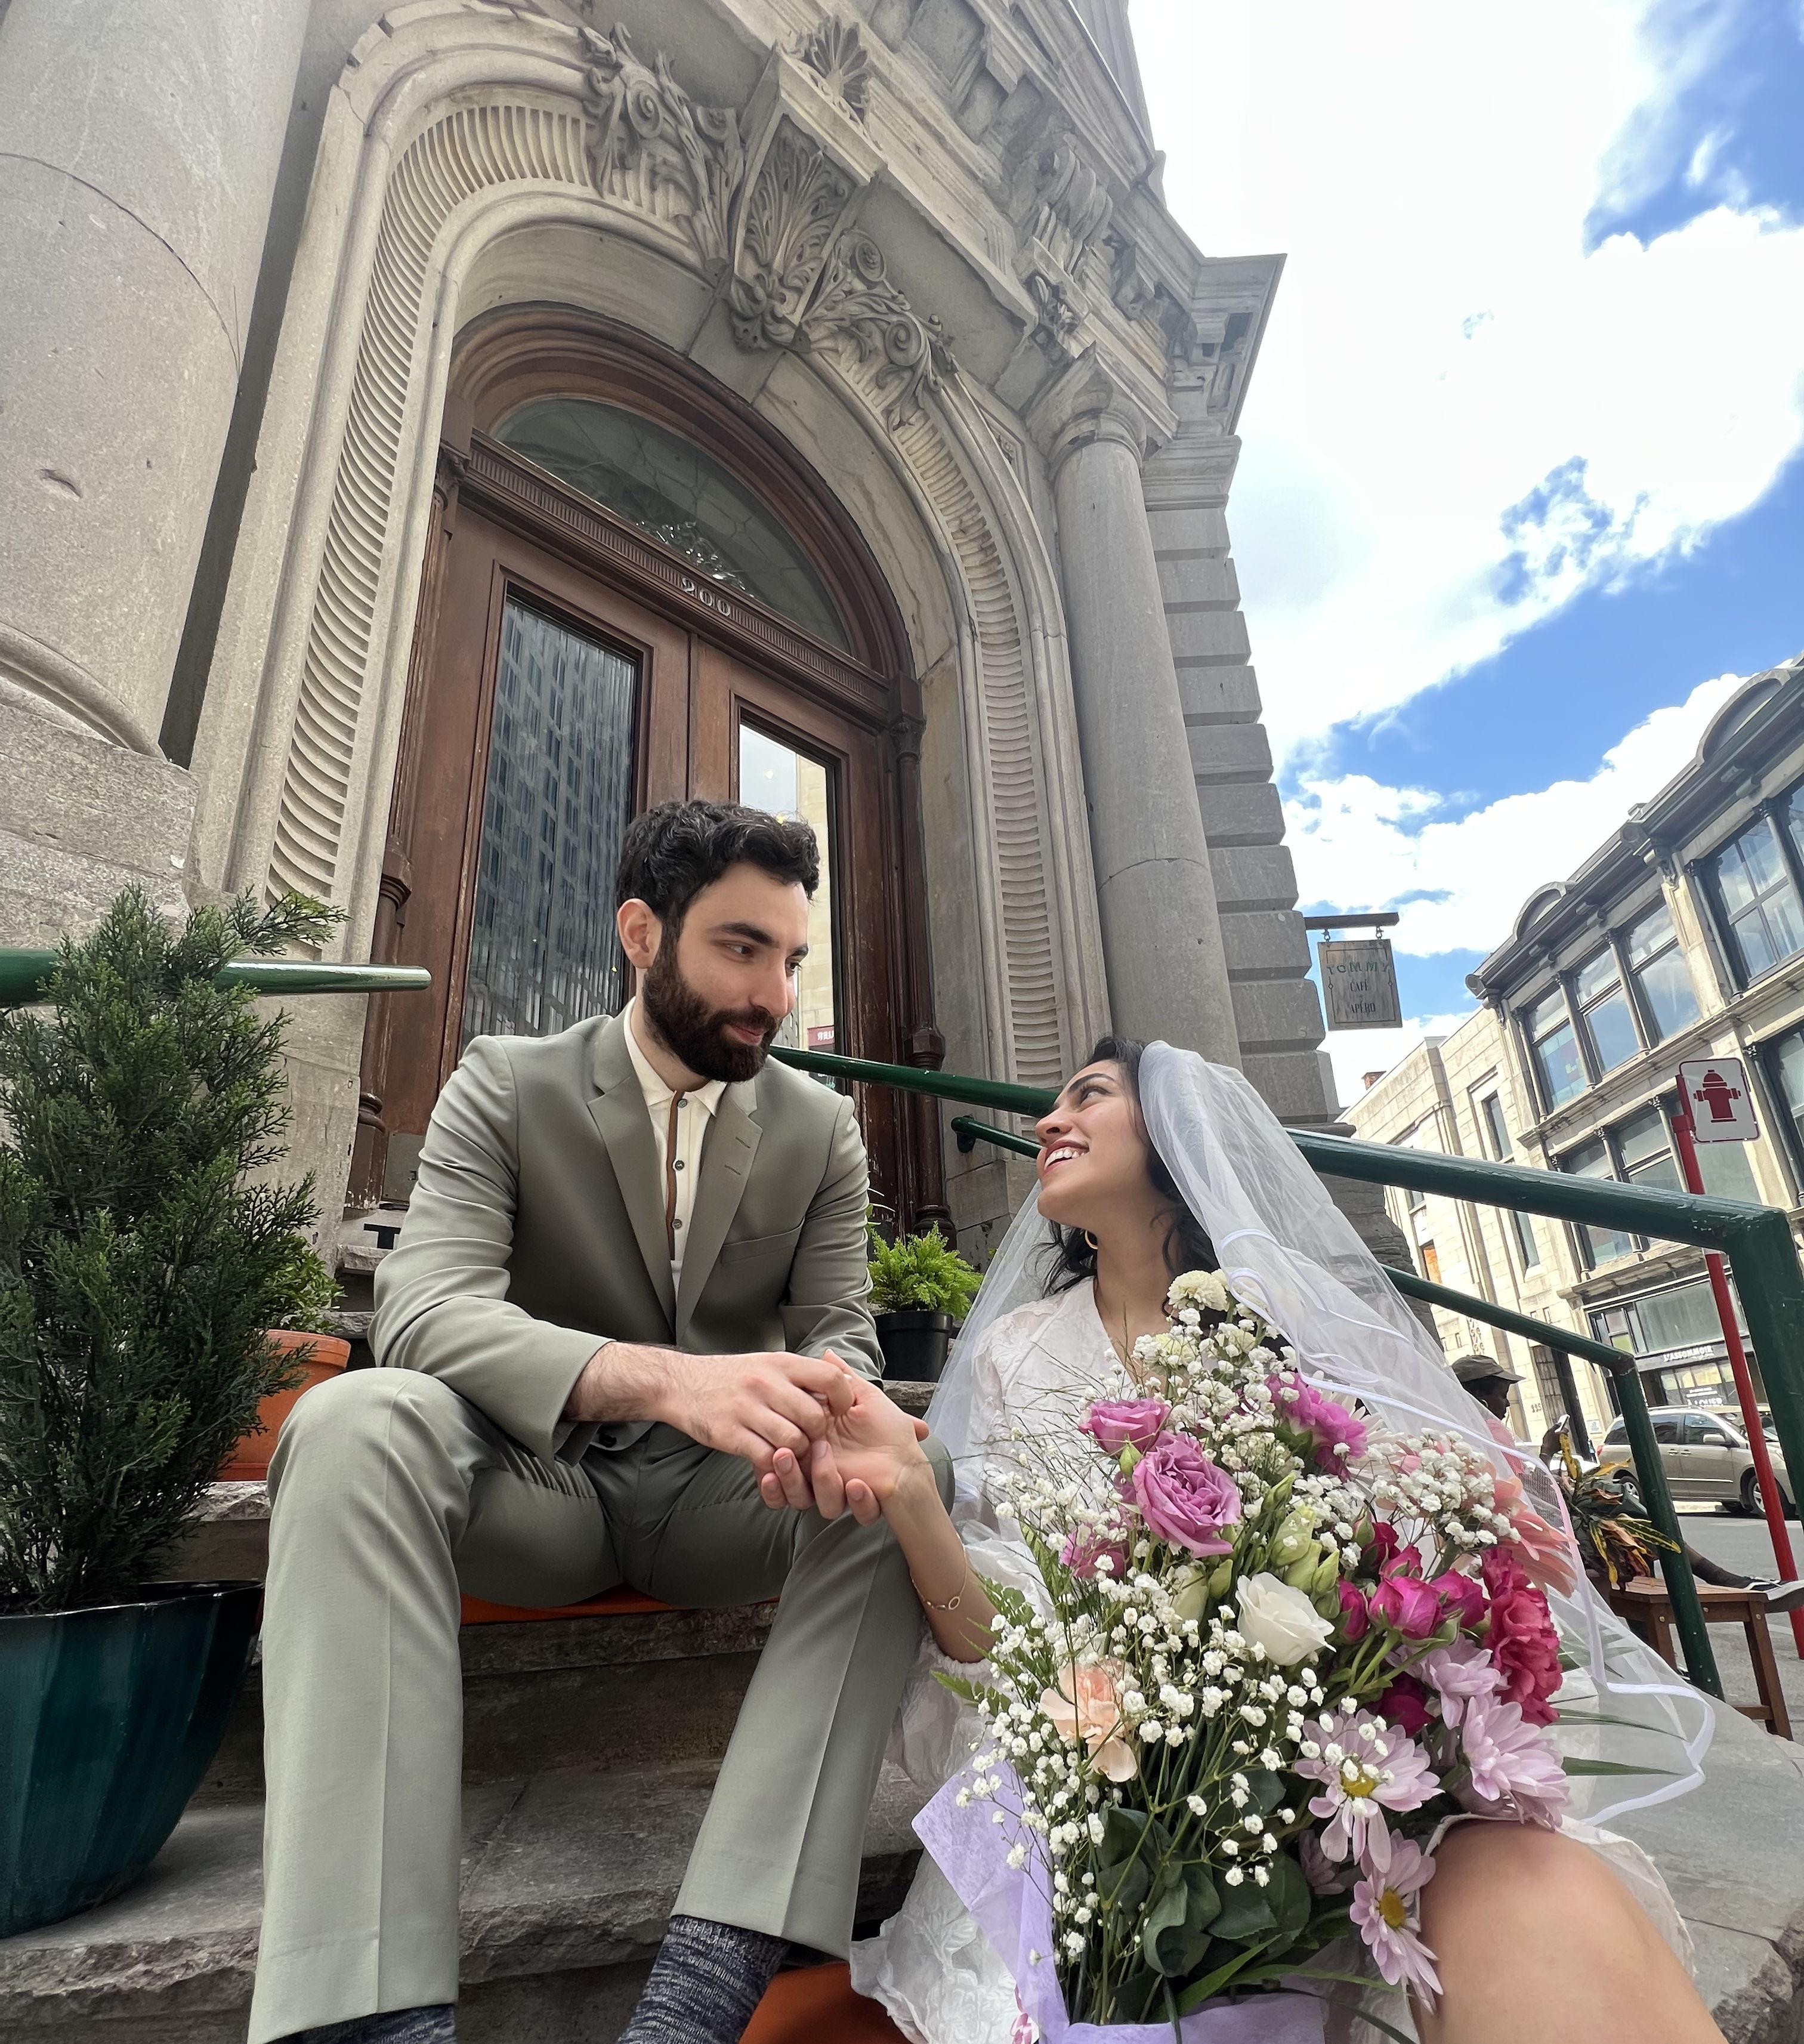 The Wedding Website of Radja Belakrouf and Kourosh Maghsoudloo